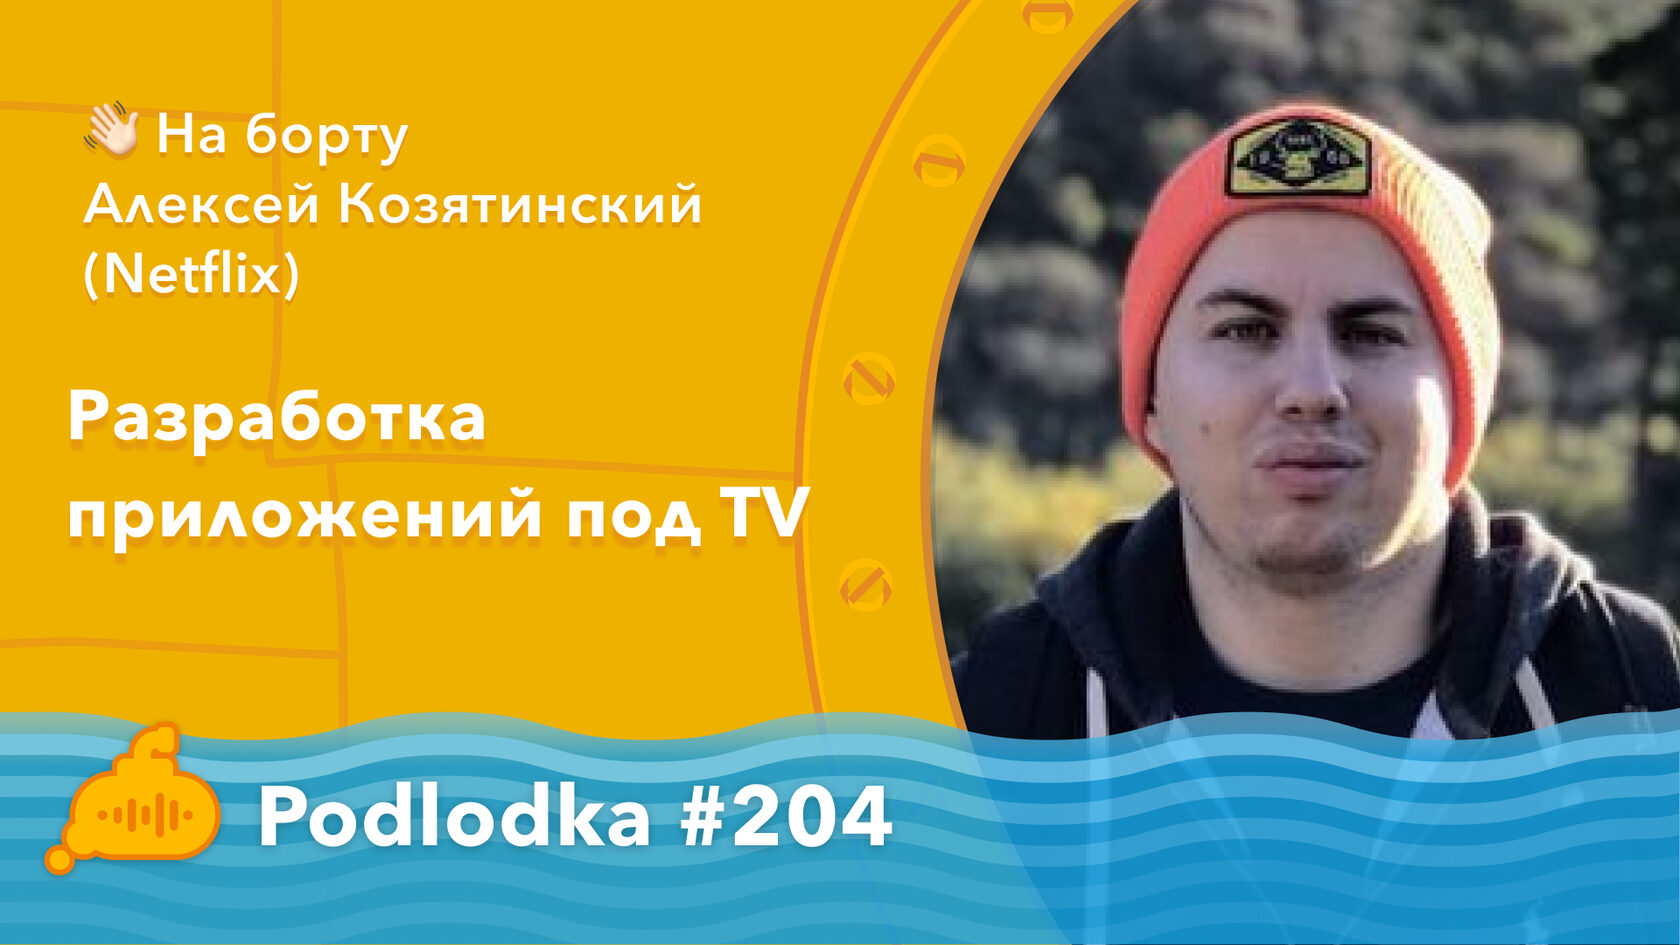 Podlodka #204 - Разработка приложений под TV